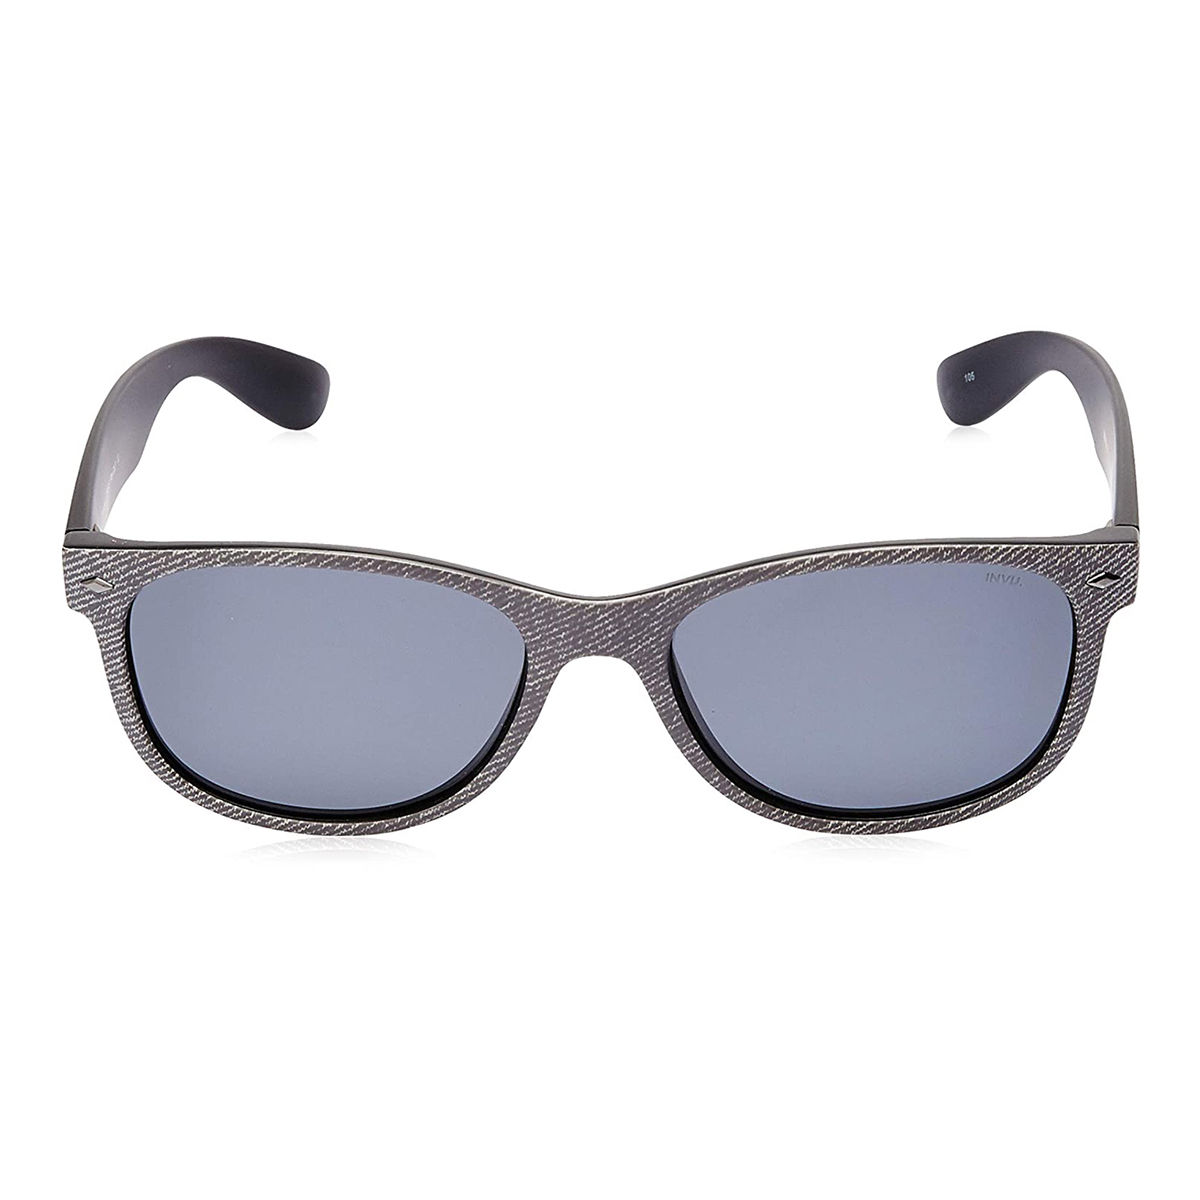 Invu Sunglasses Rectangular Sunglass With Grey Lens For Men